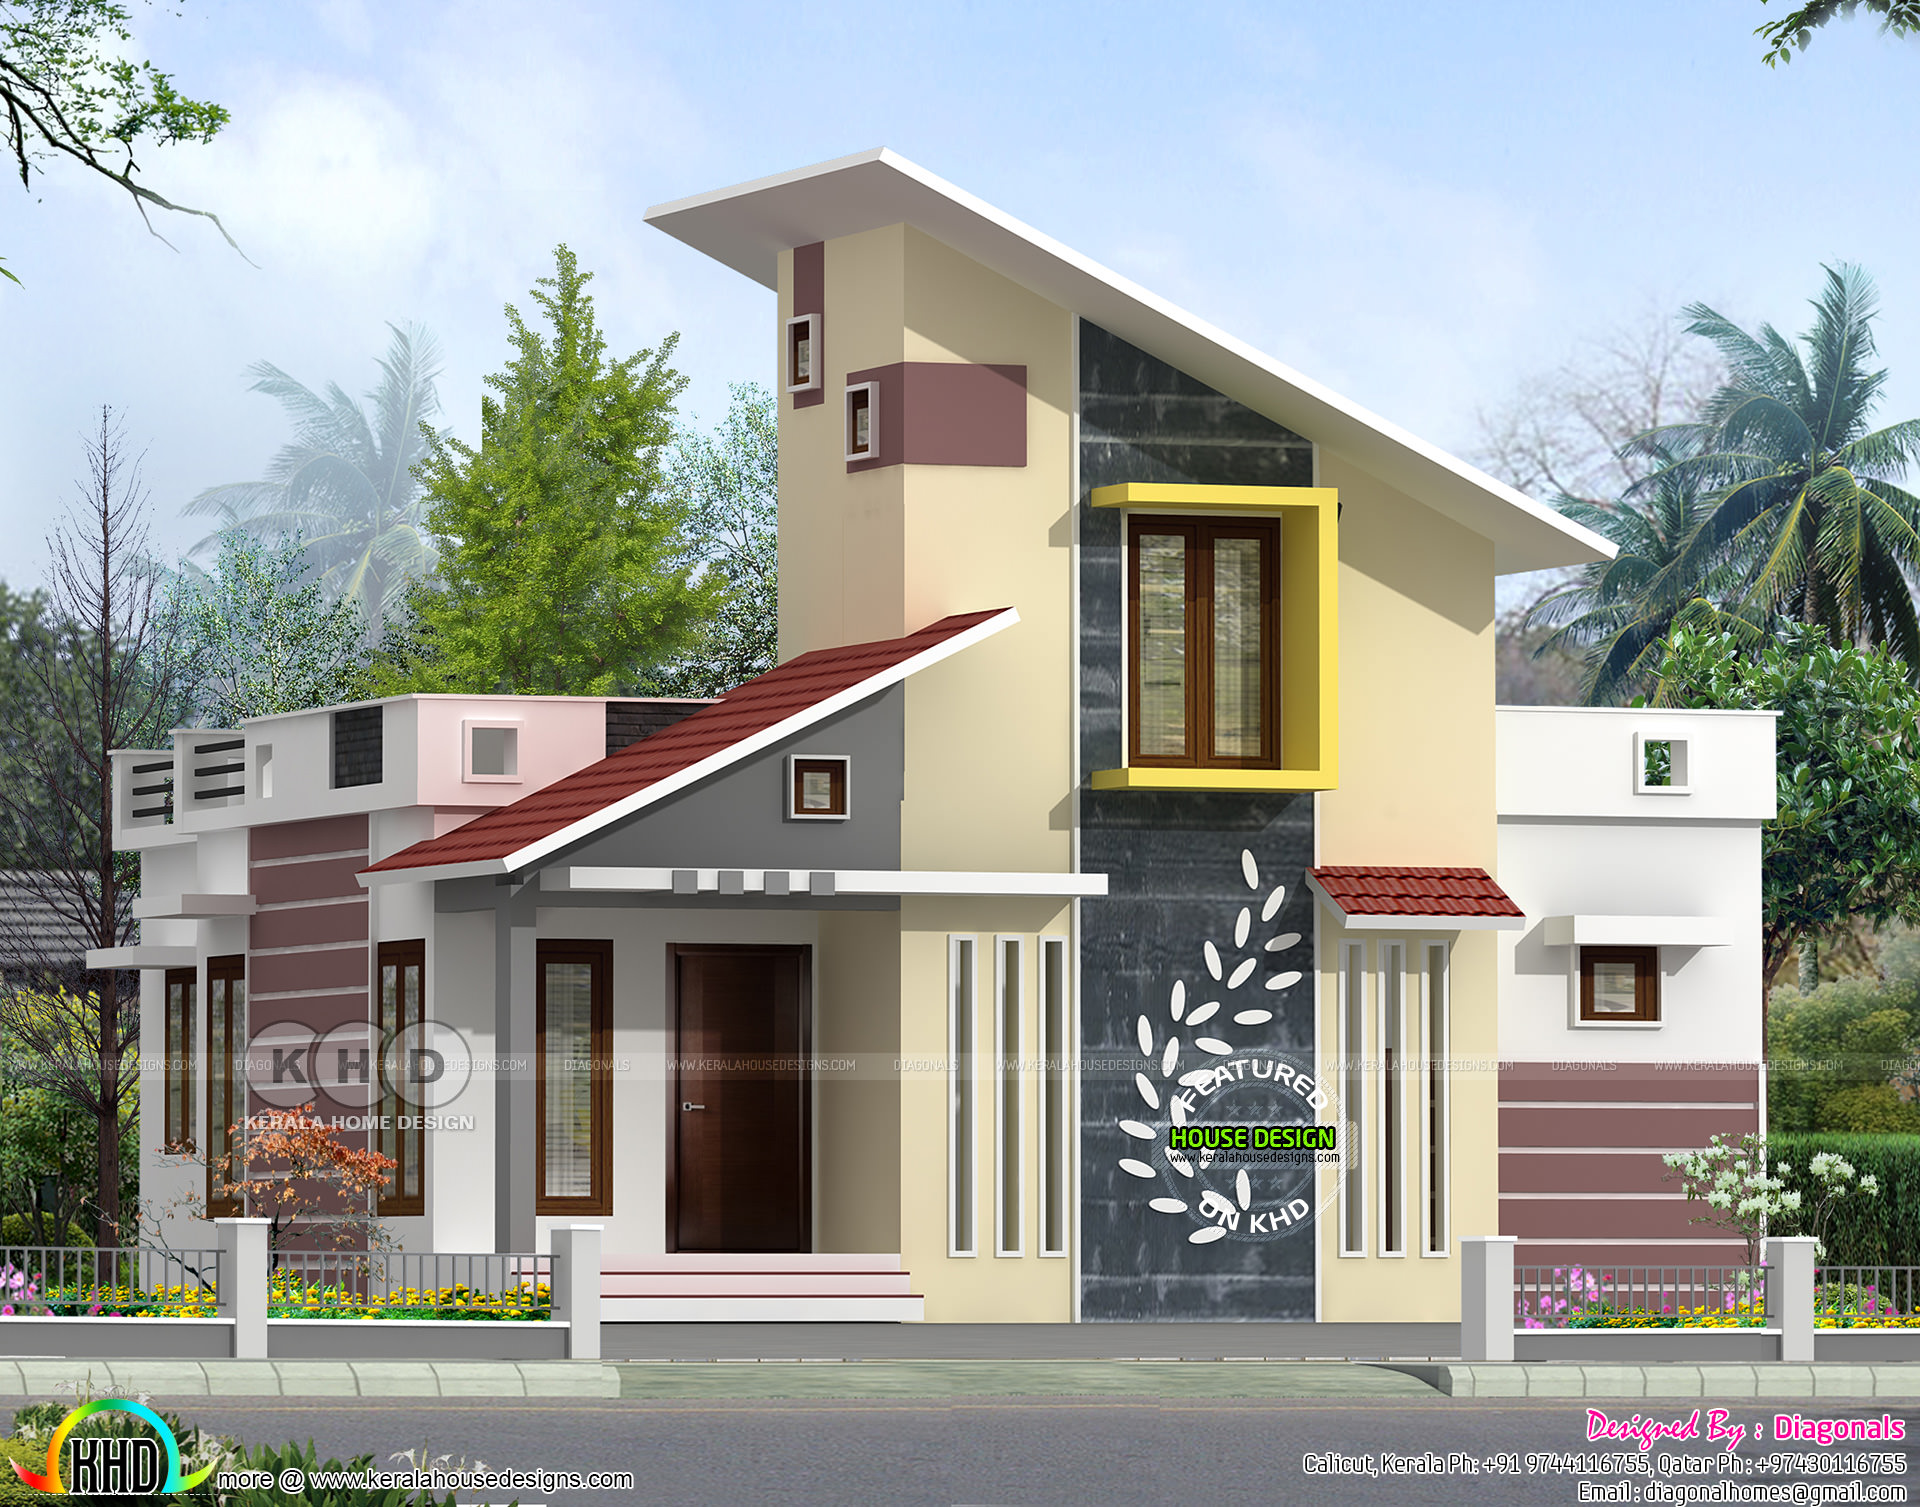 Modern single floor  3  BHK  home  1200  sq  ft  Kerala home  